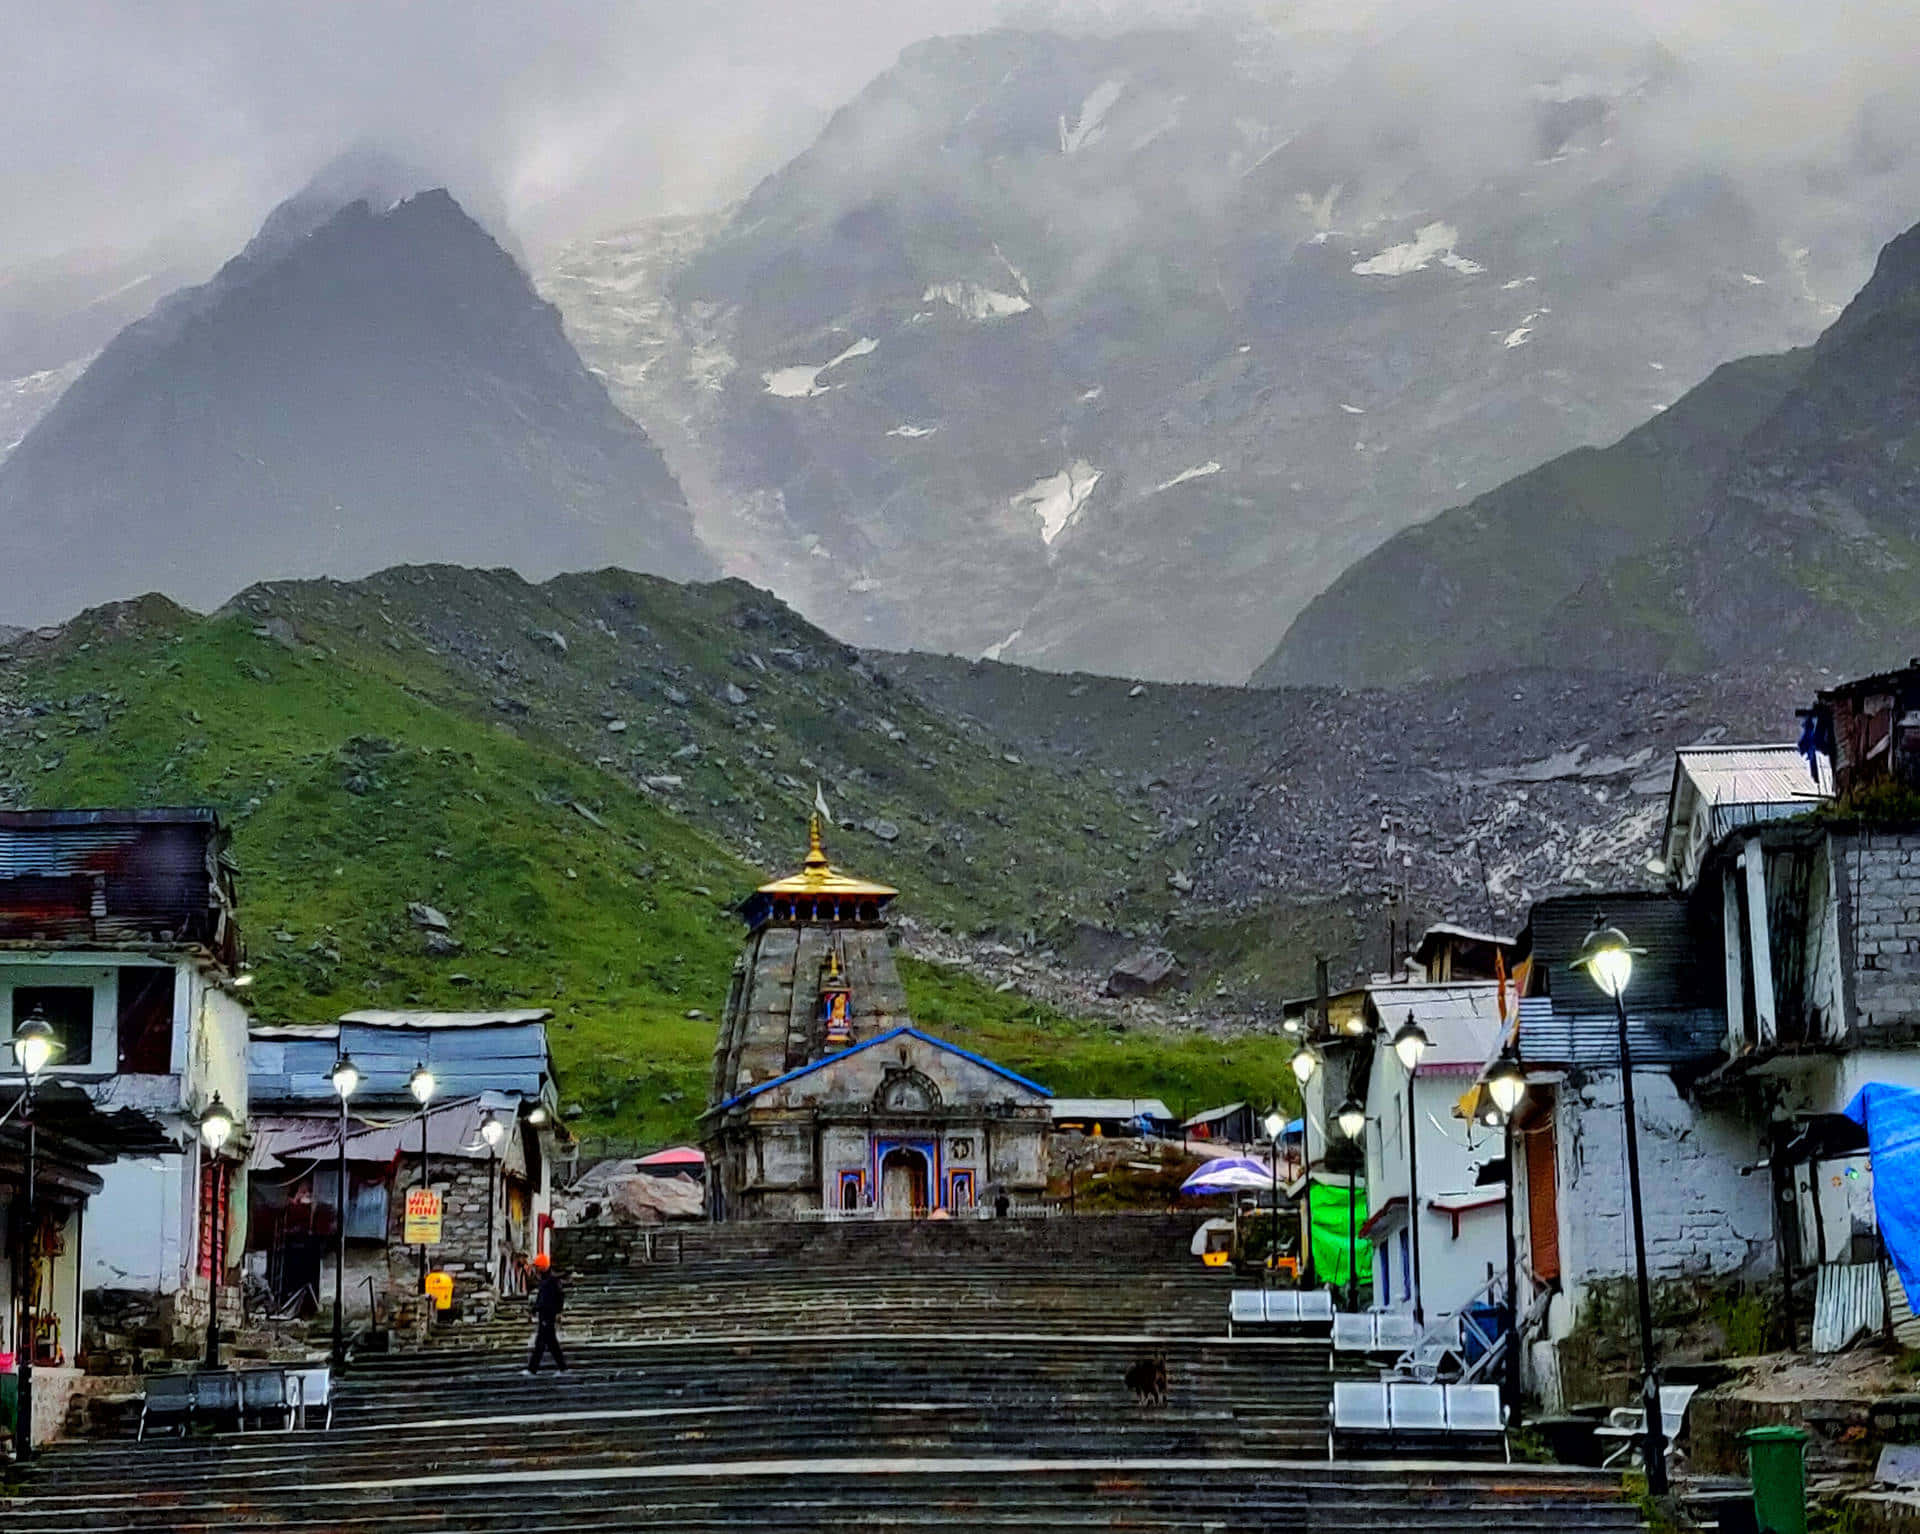 Magnificent view of Kedarnath